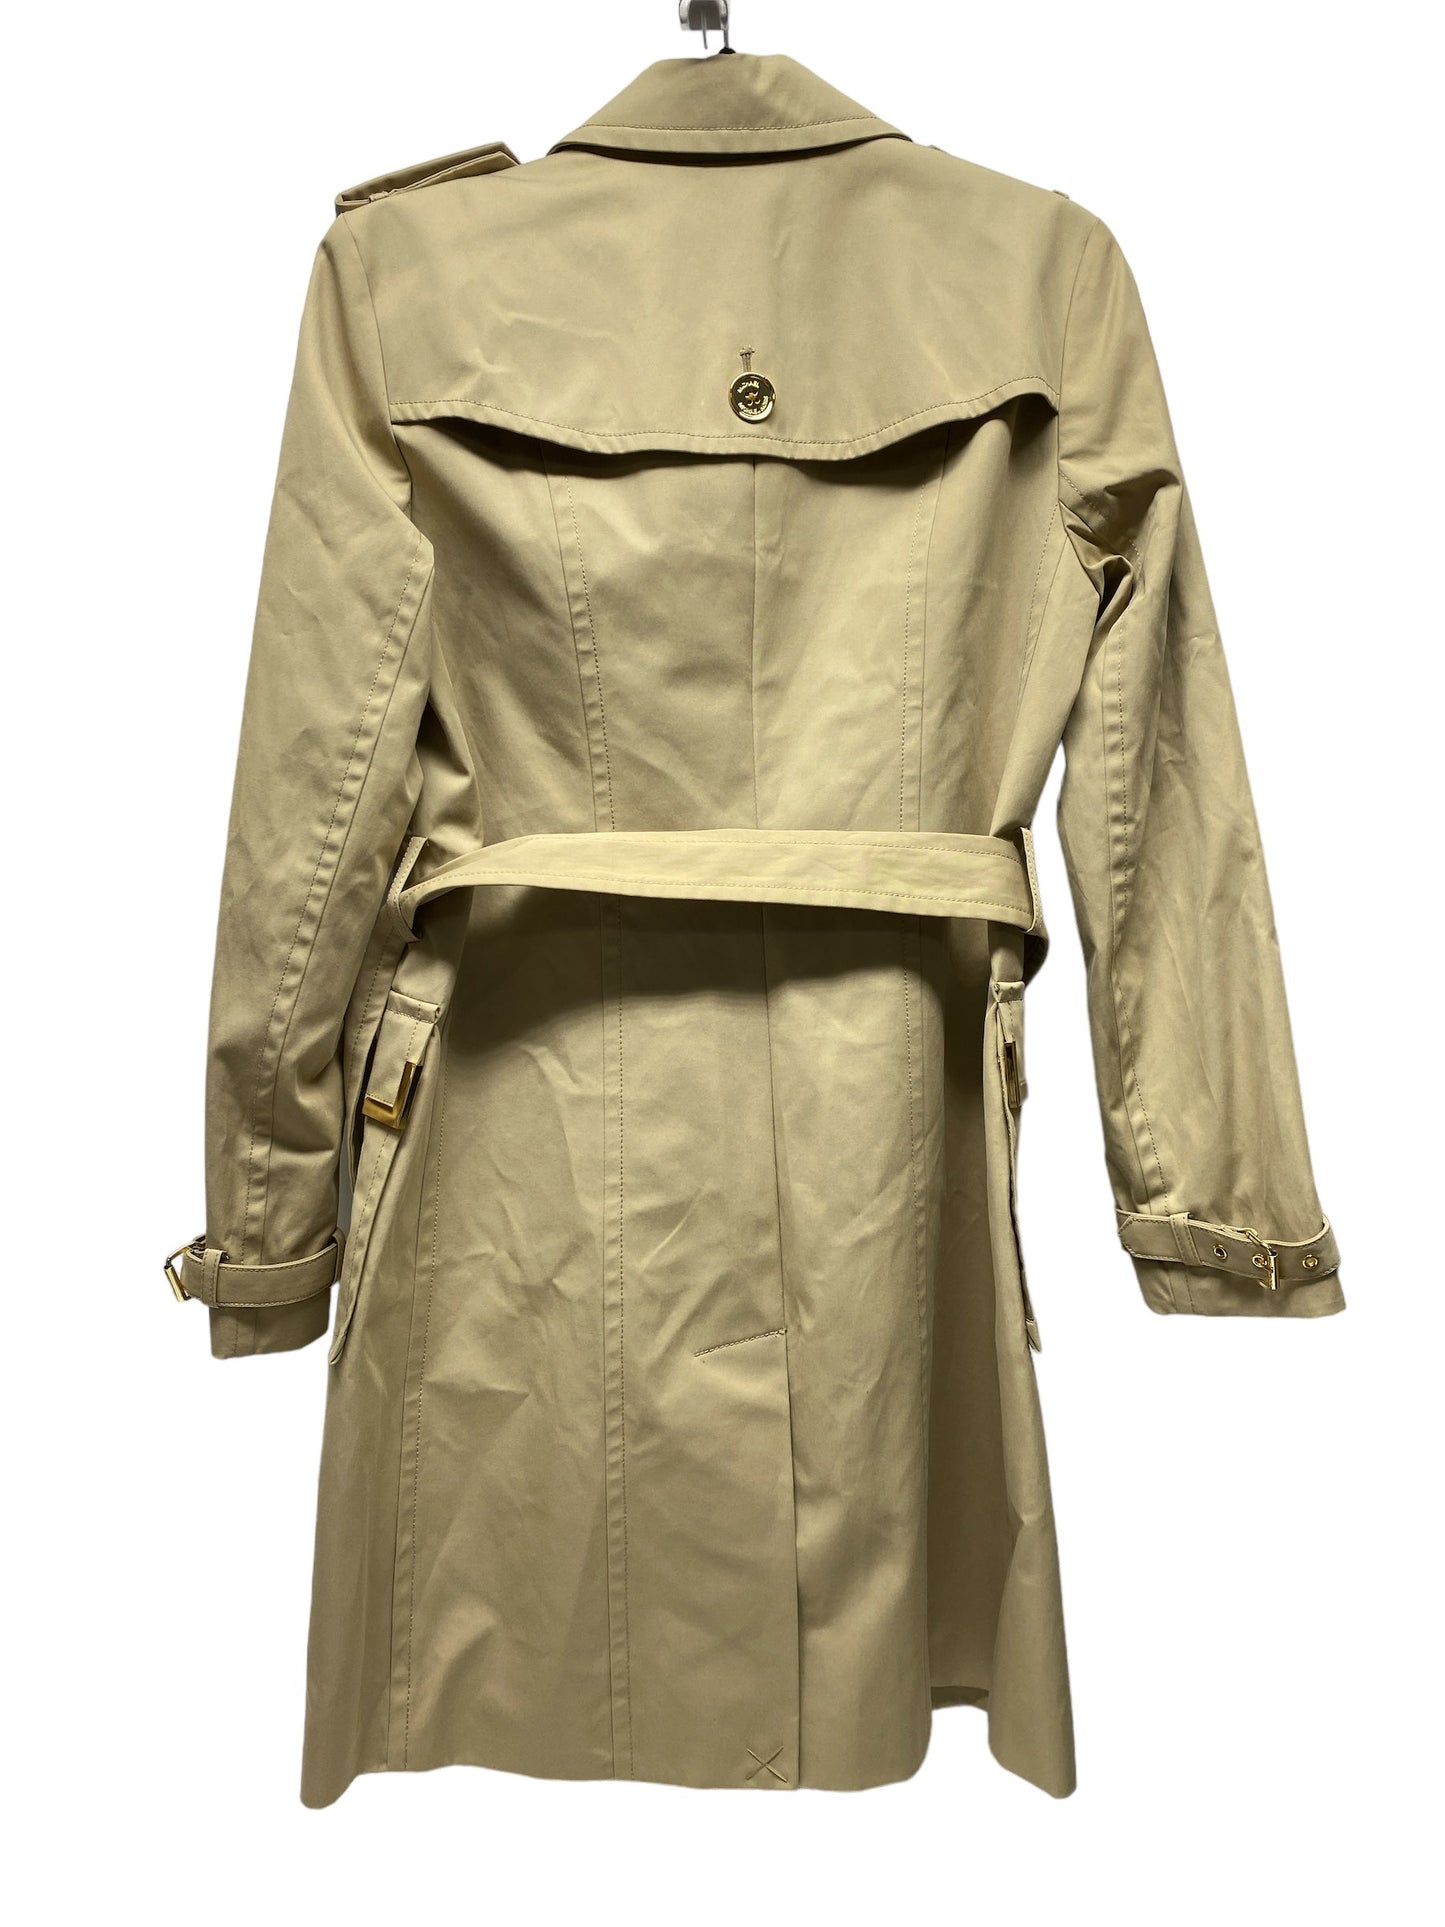 Coat Designer By Michael Kors  Size: M